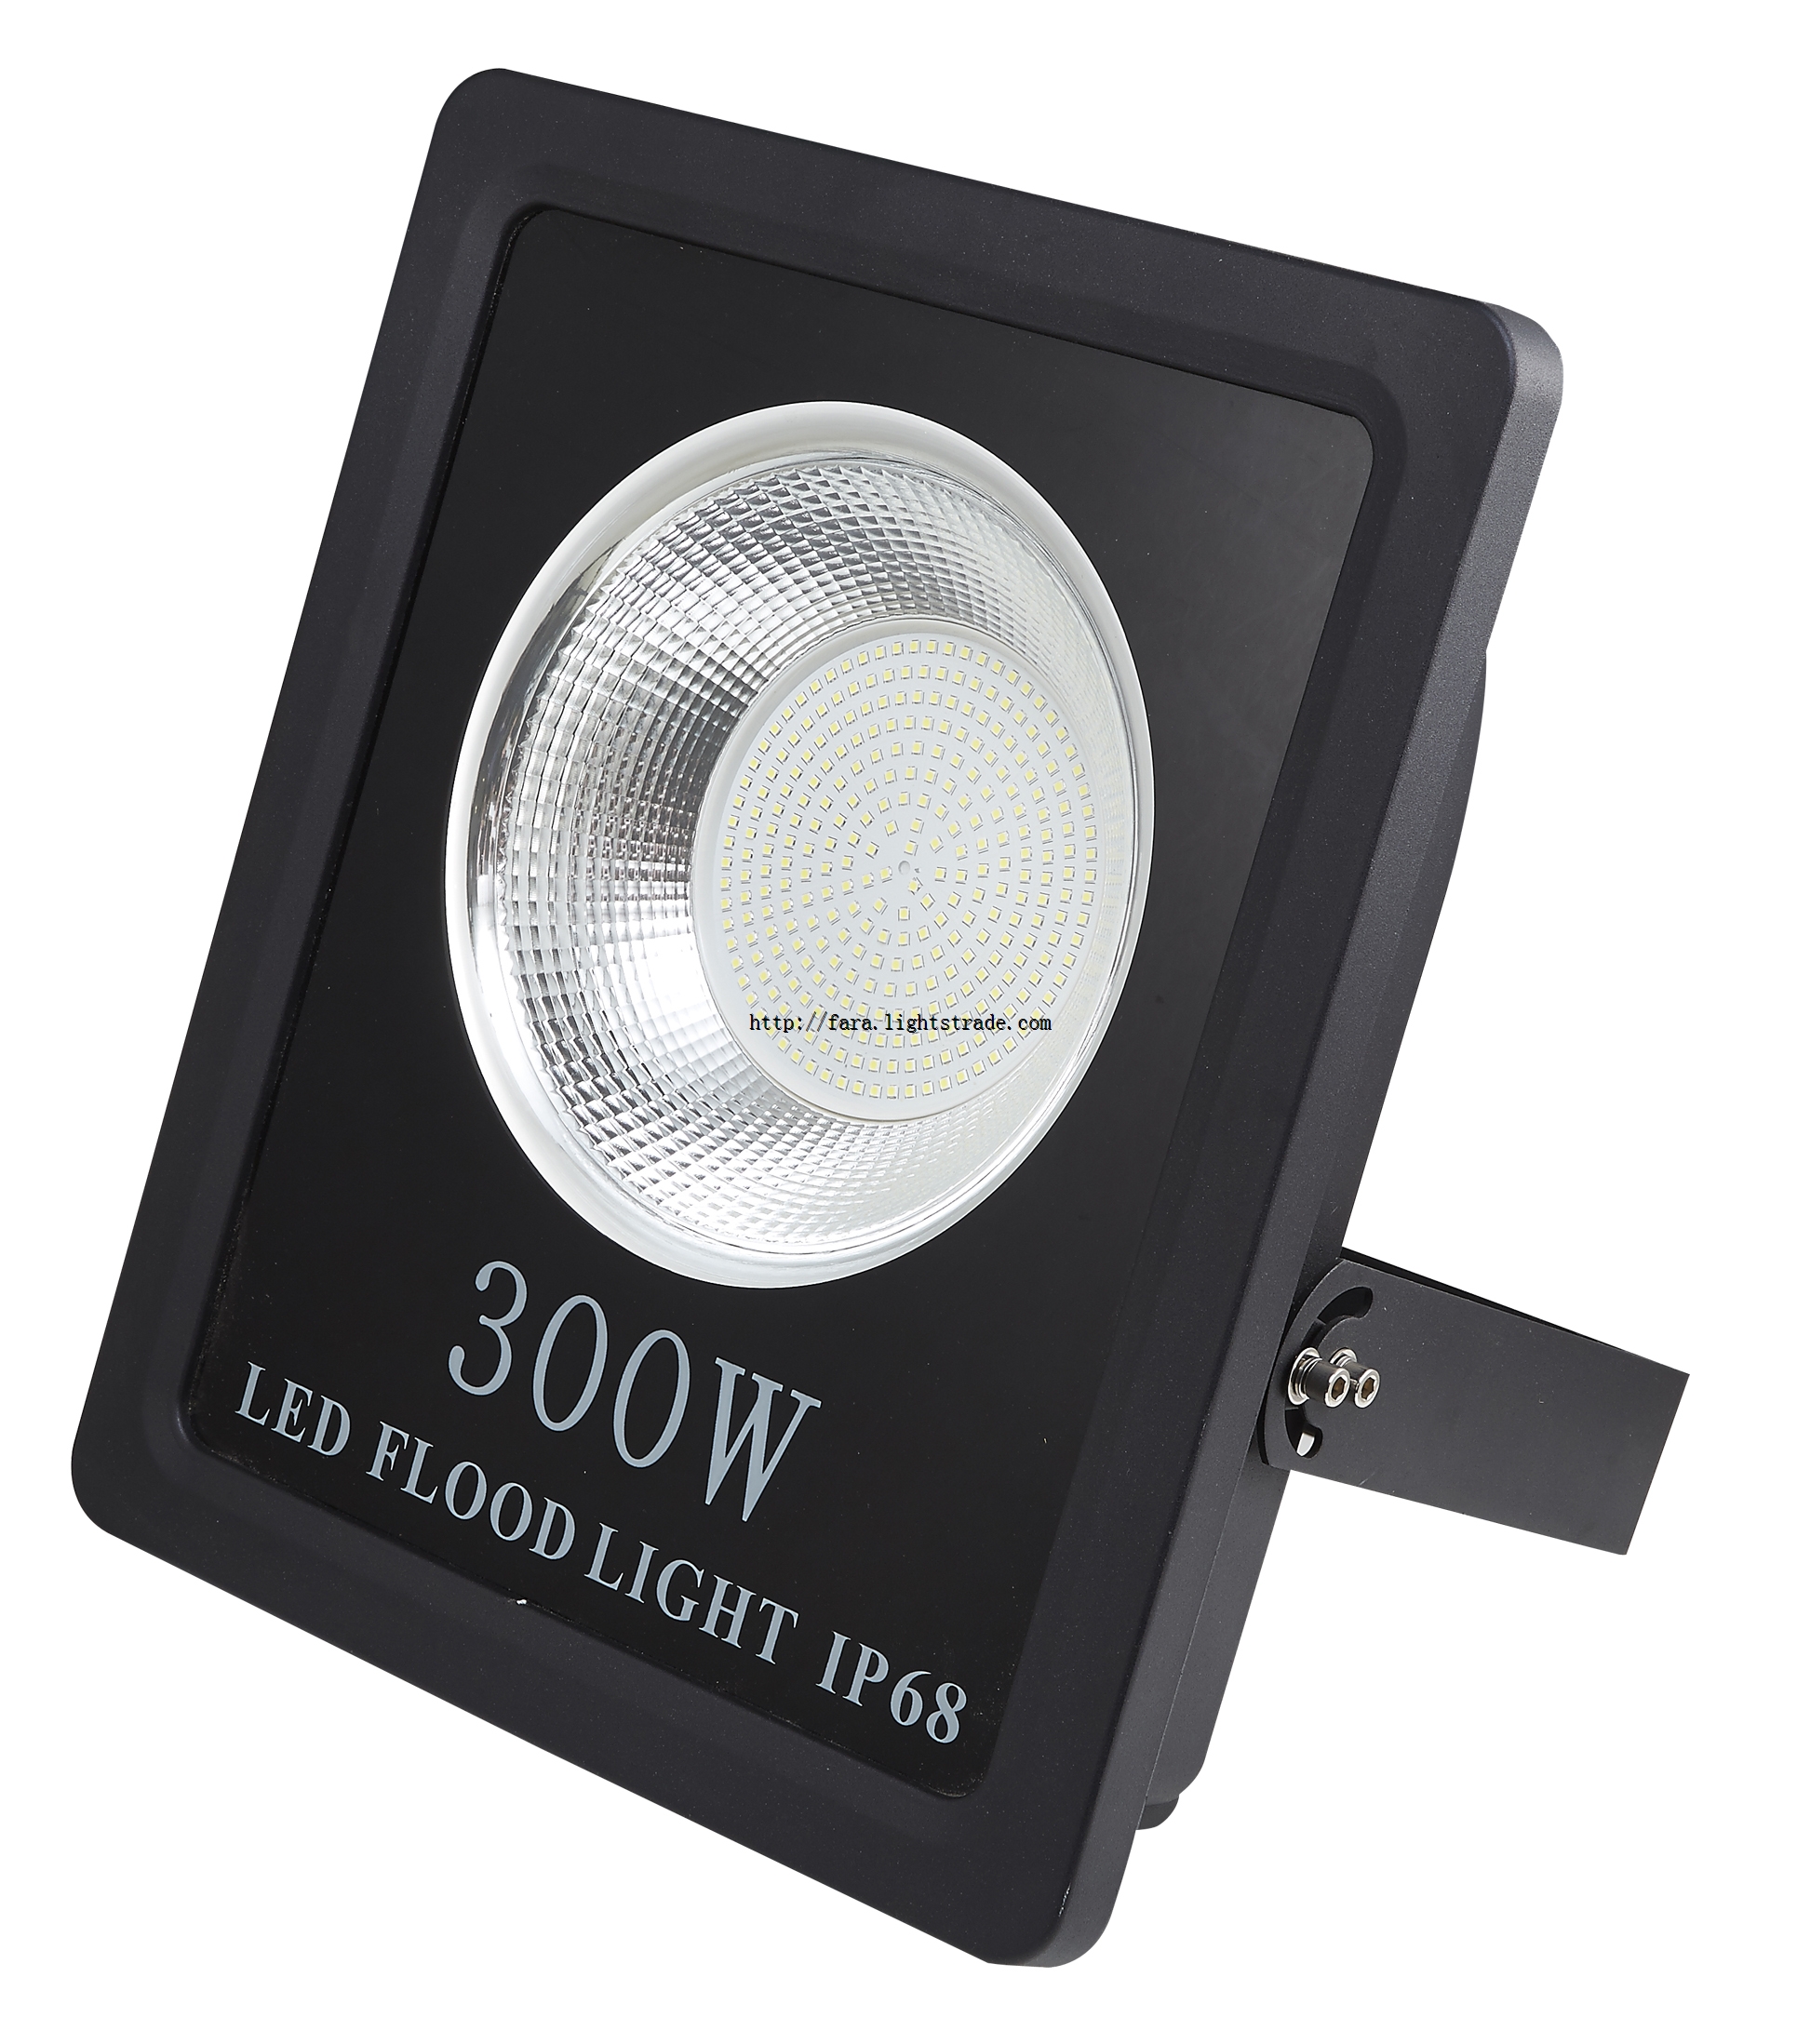 SMD 300W LED flood light ip65